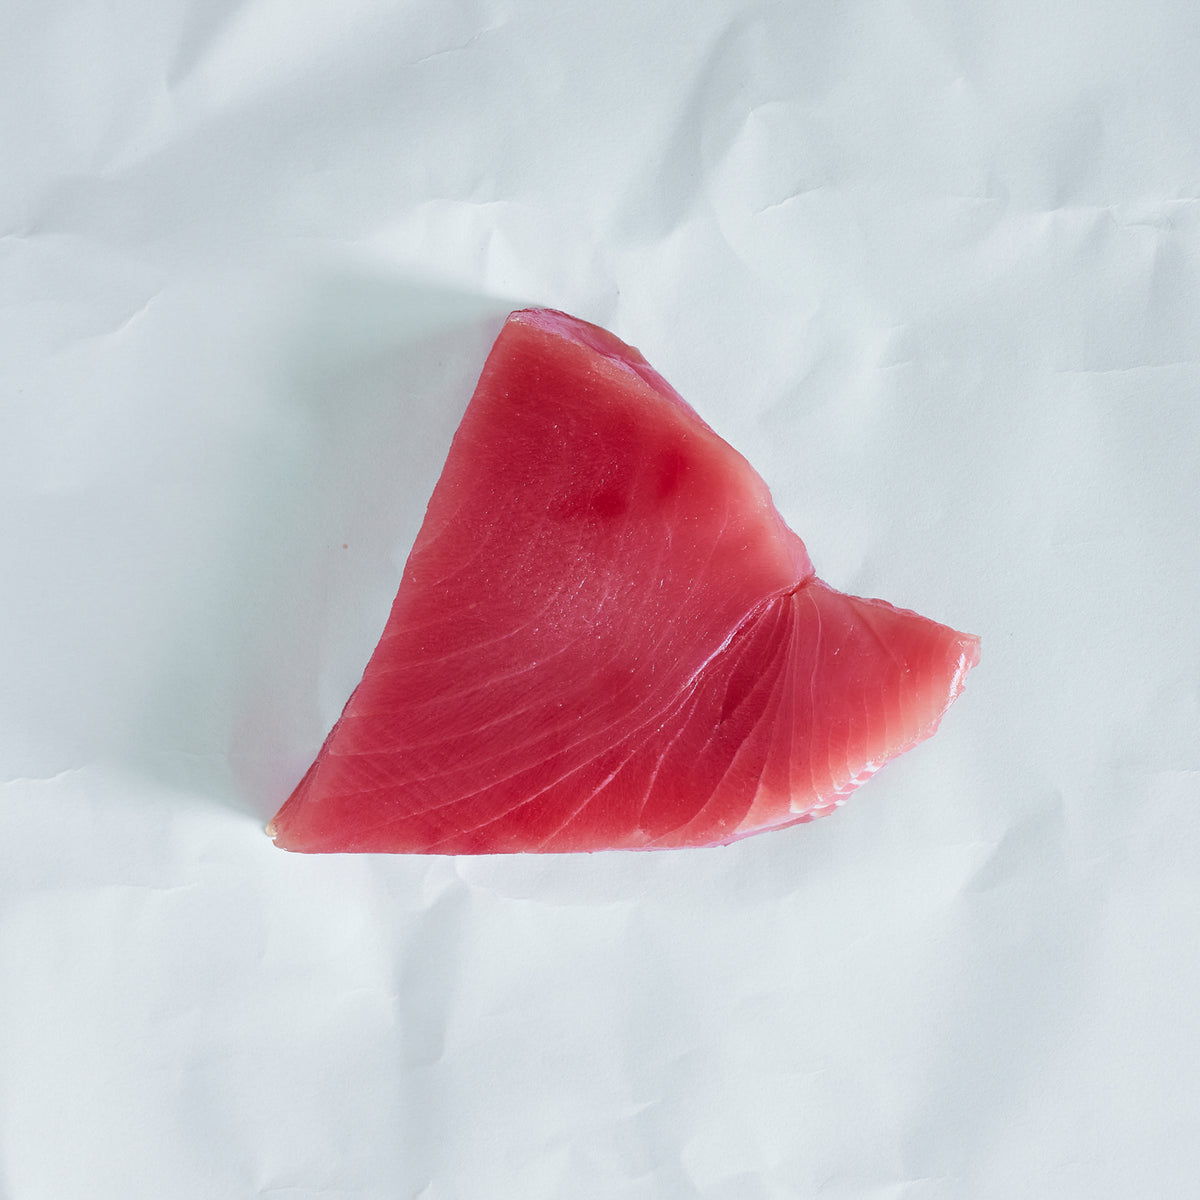 Yellowfin Tuna, Ahi Tuna